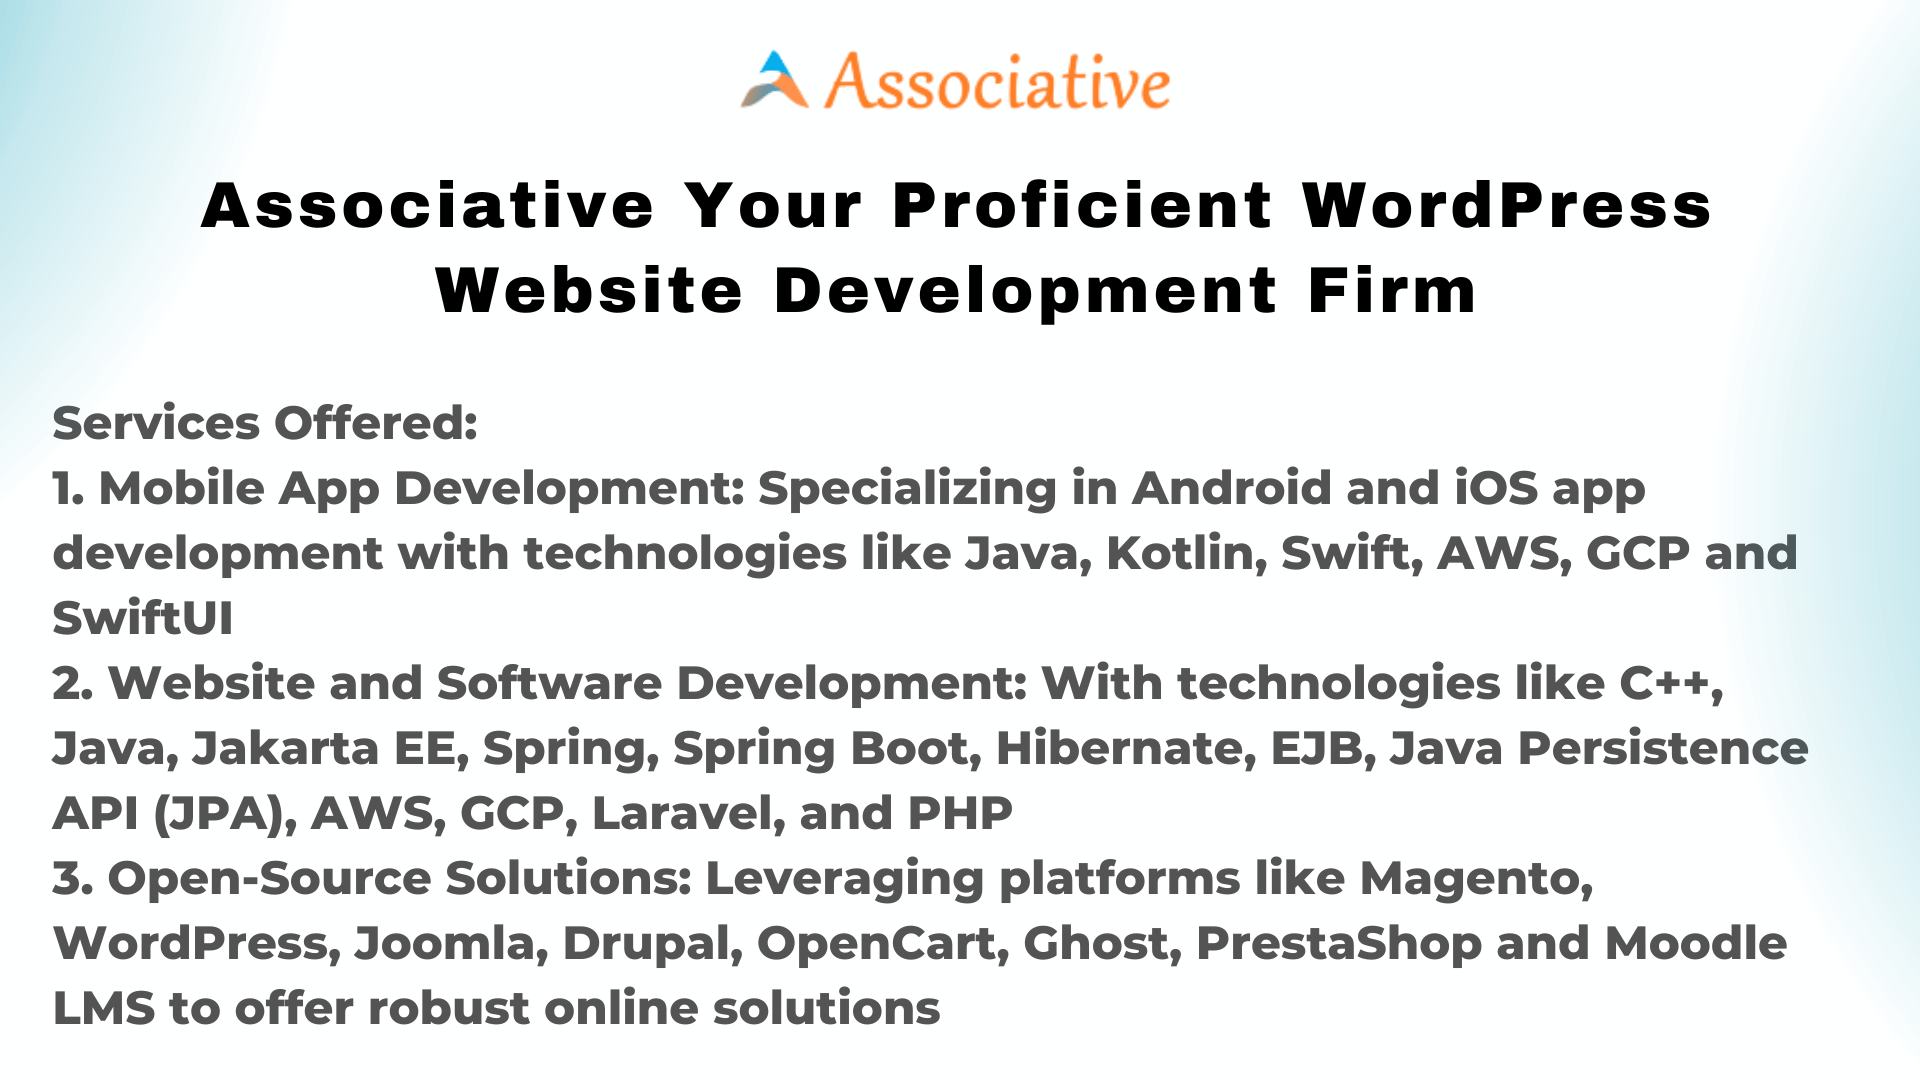 Associative Your Proficient WordPress Website Development Firm